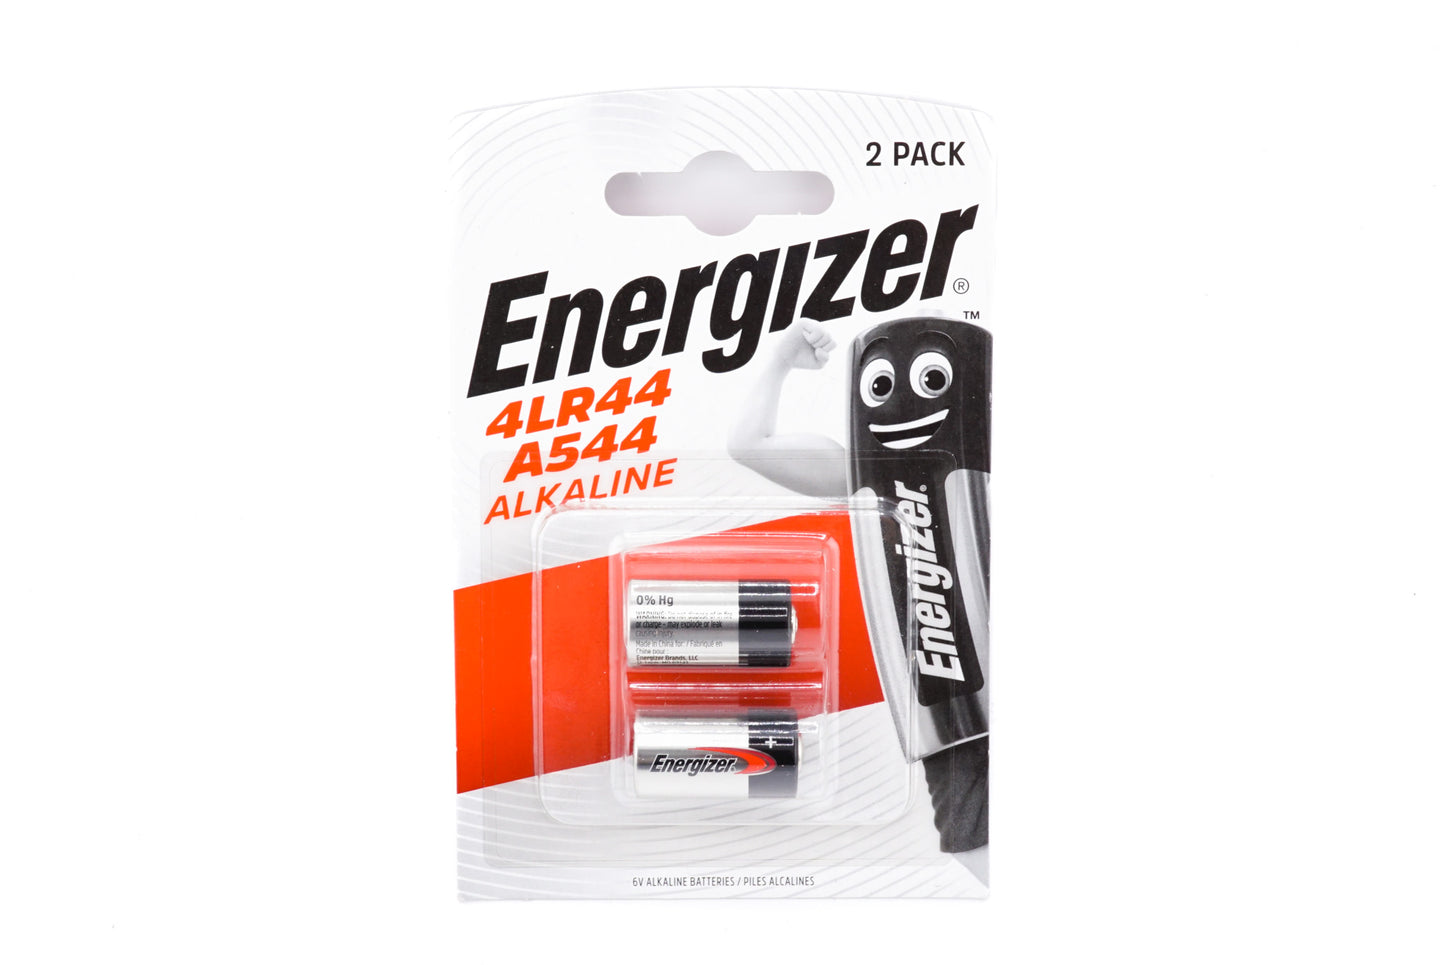 Energizer 1x2 4LR44 / A544 6V alkaliparisto